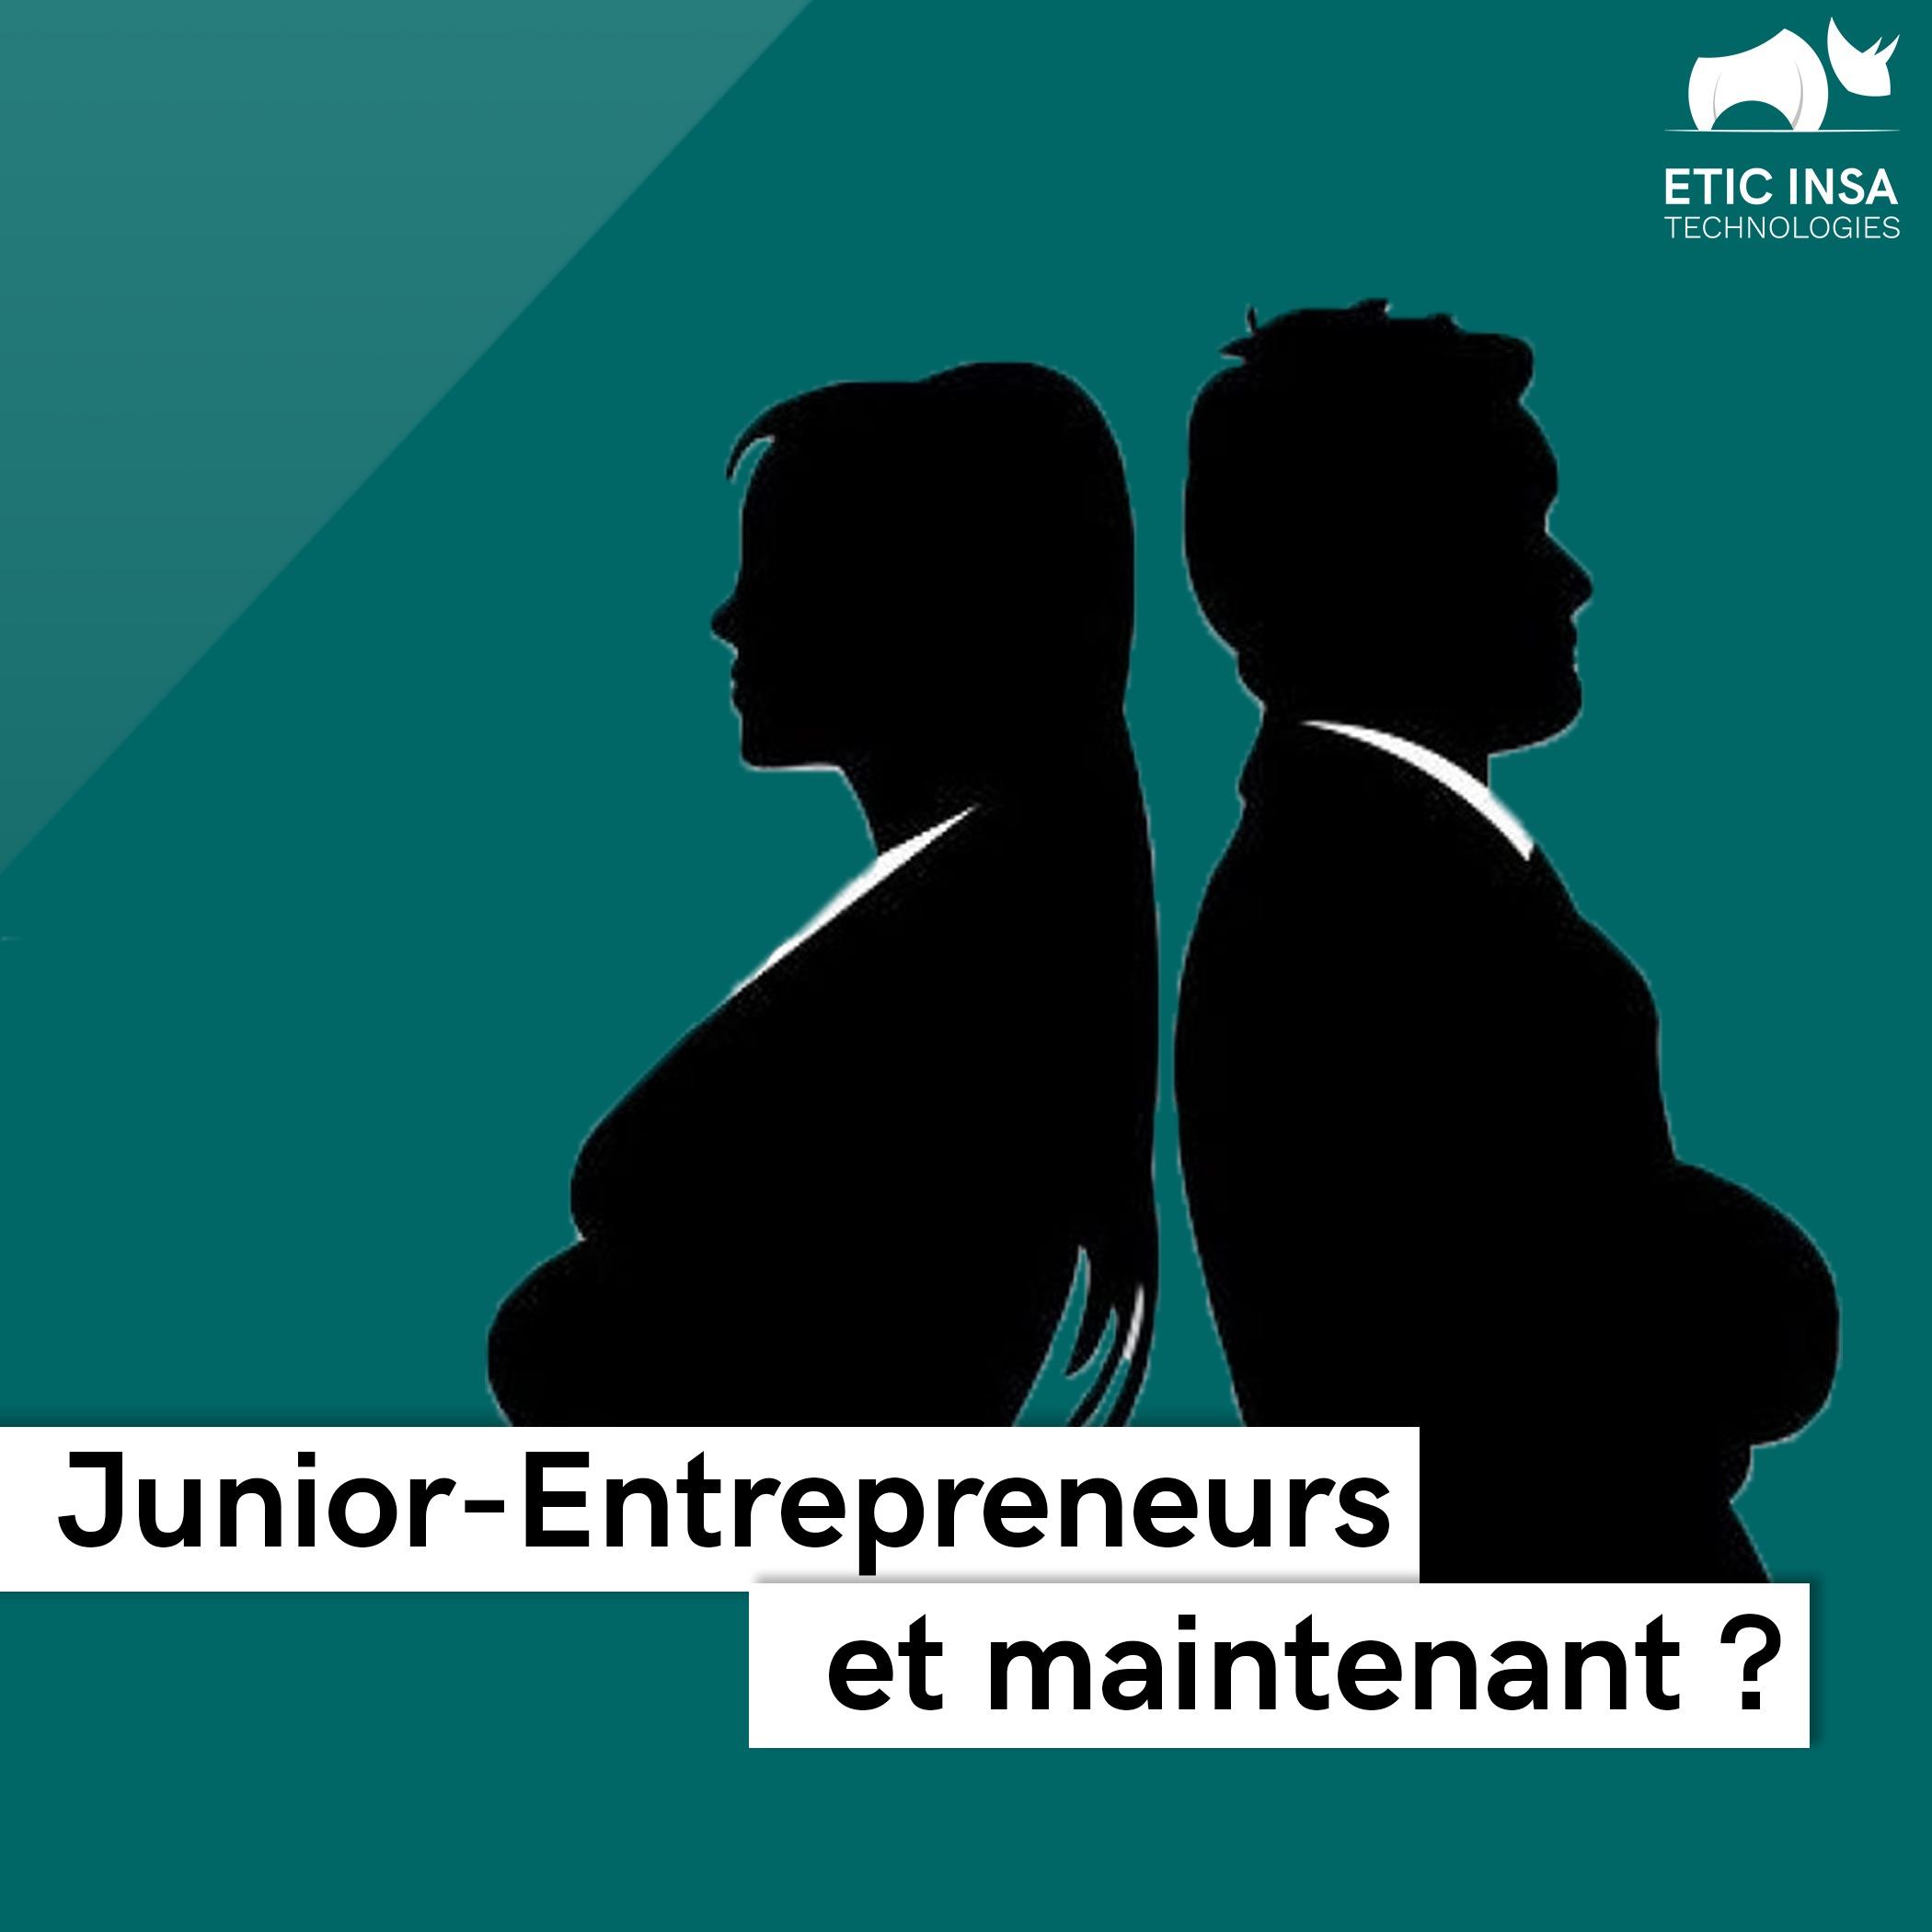 Junior-Entrepreneurs et maintenant ?